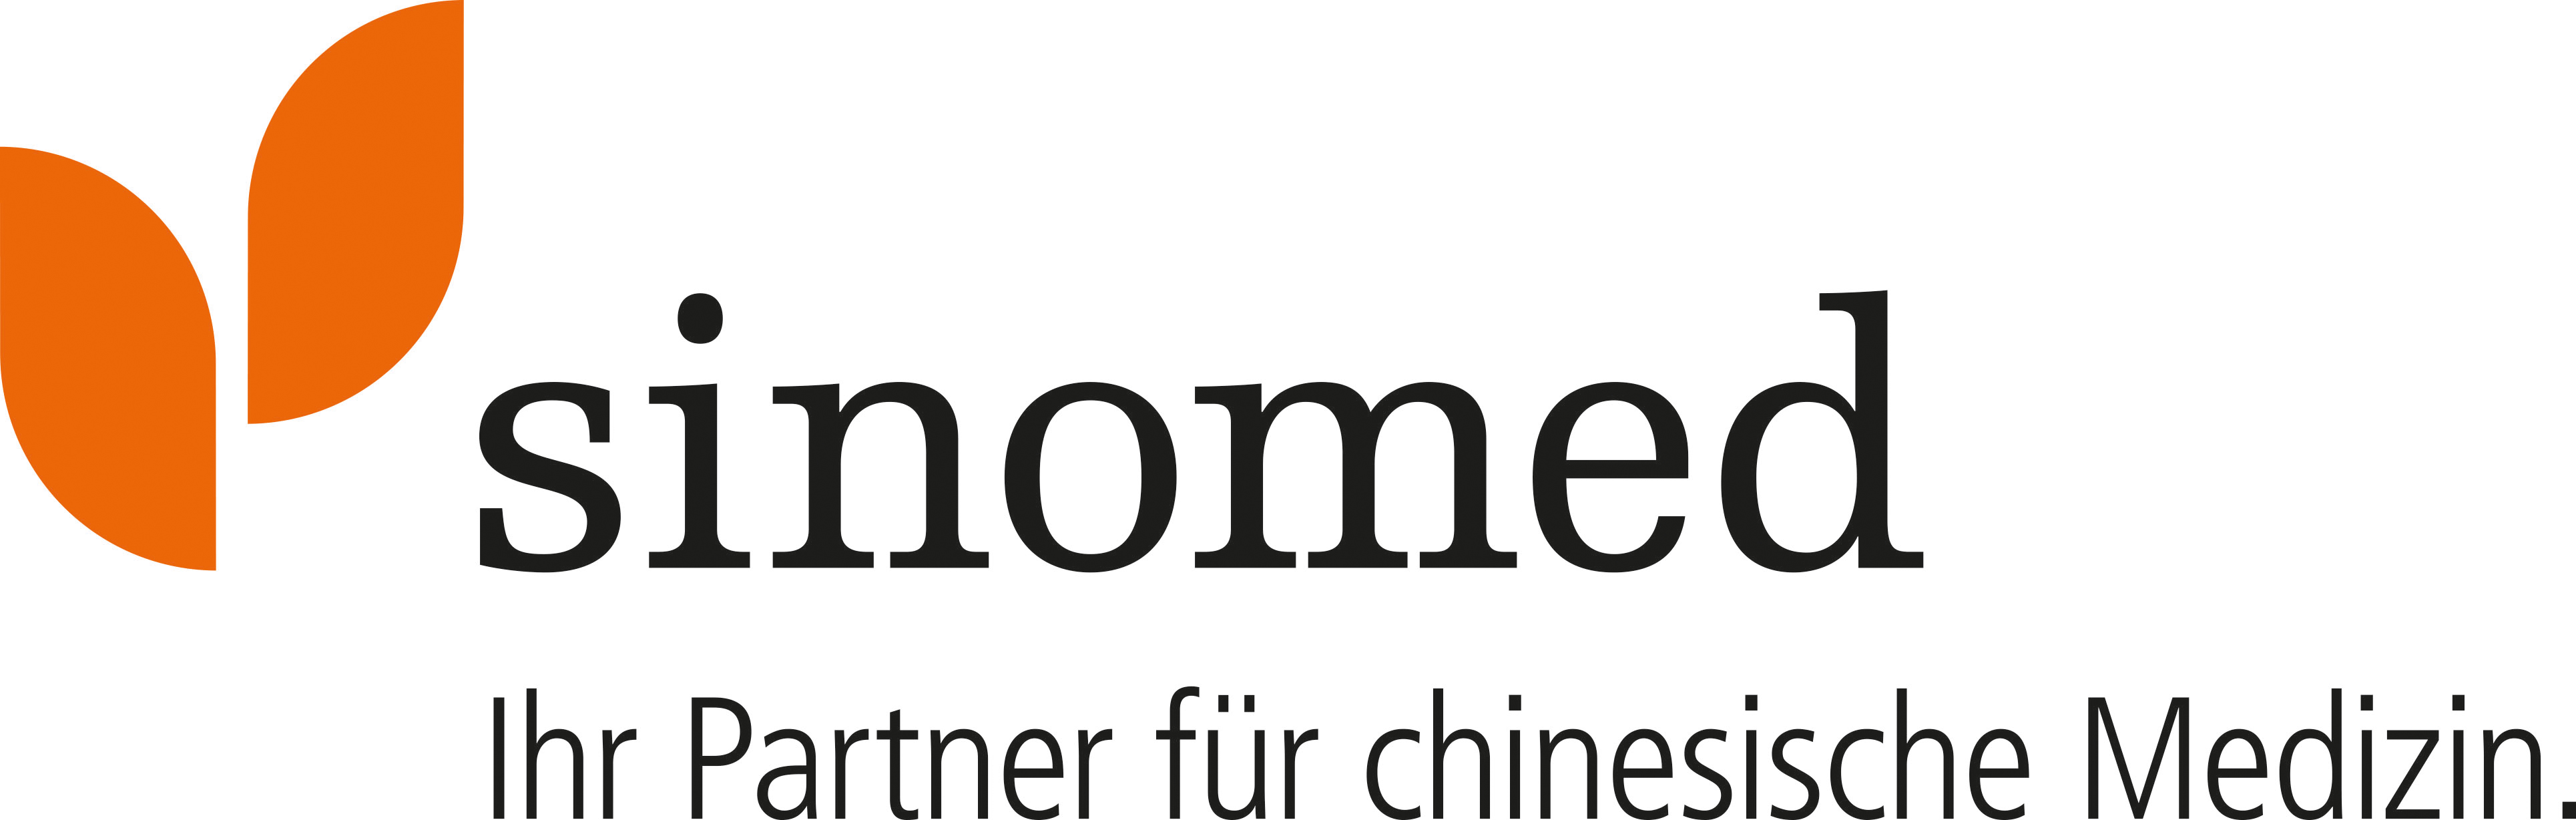 Sinomed Logo photo - 1